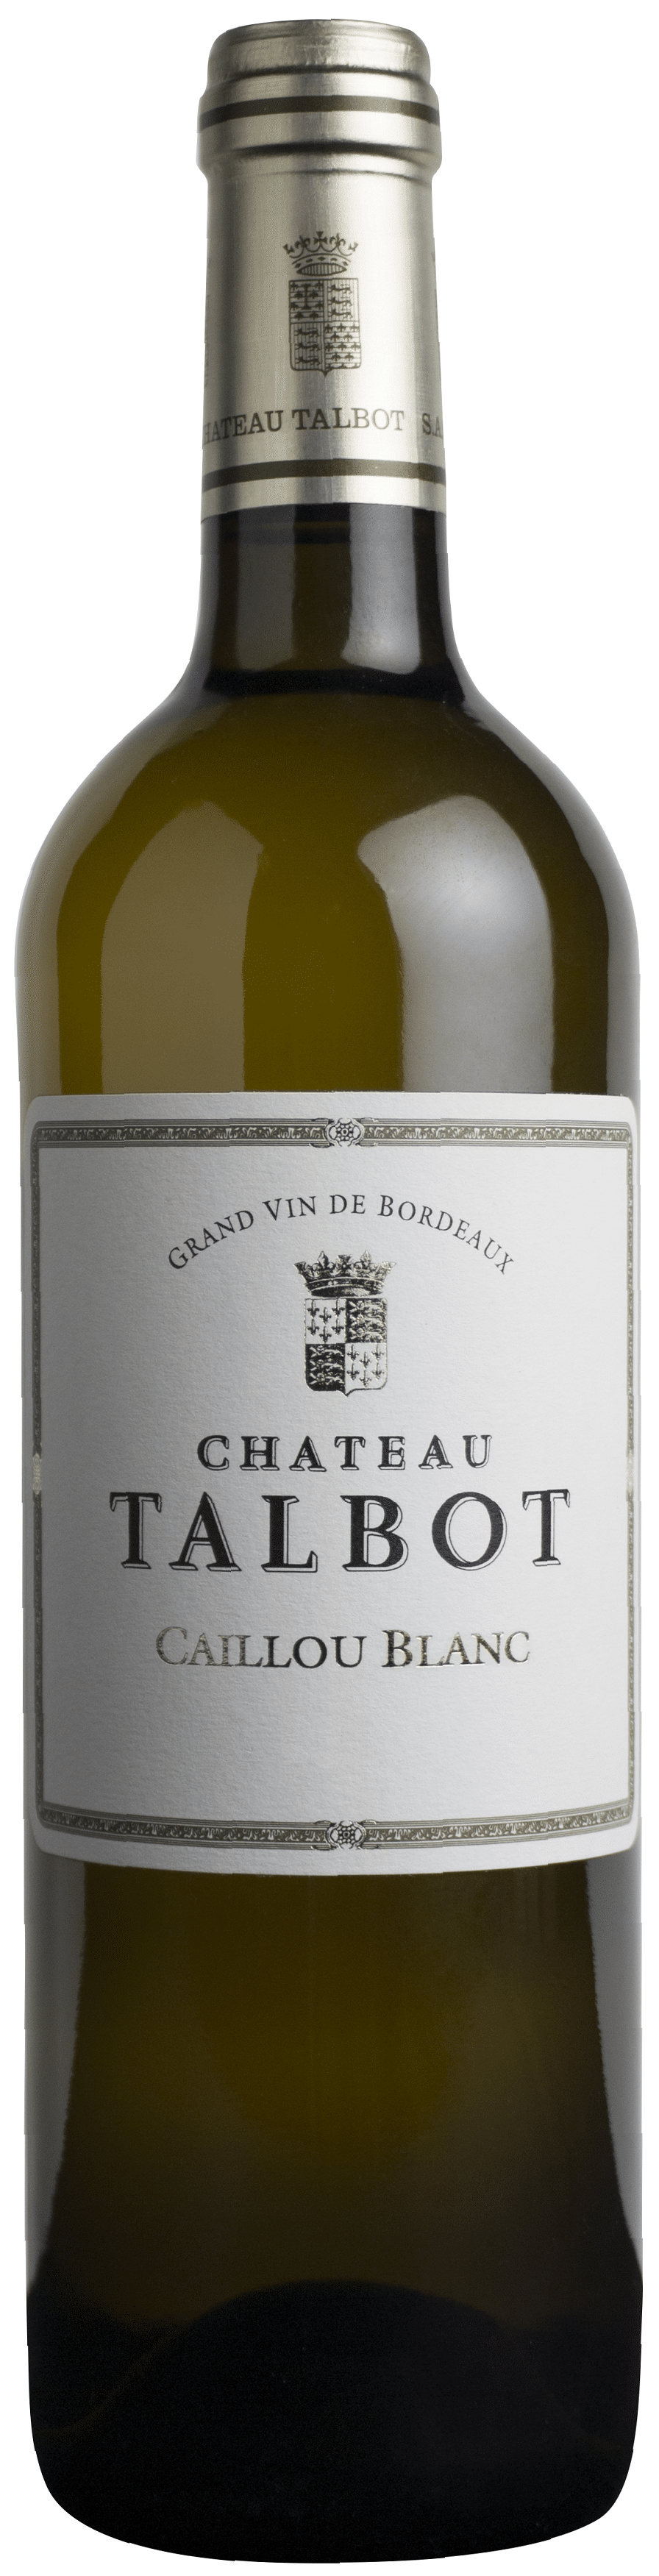 Chateau Talbot, Caillou Blanc, 2007